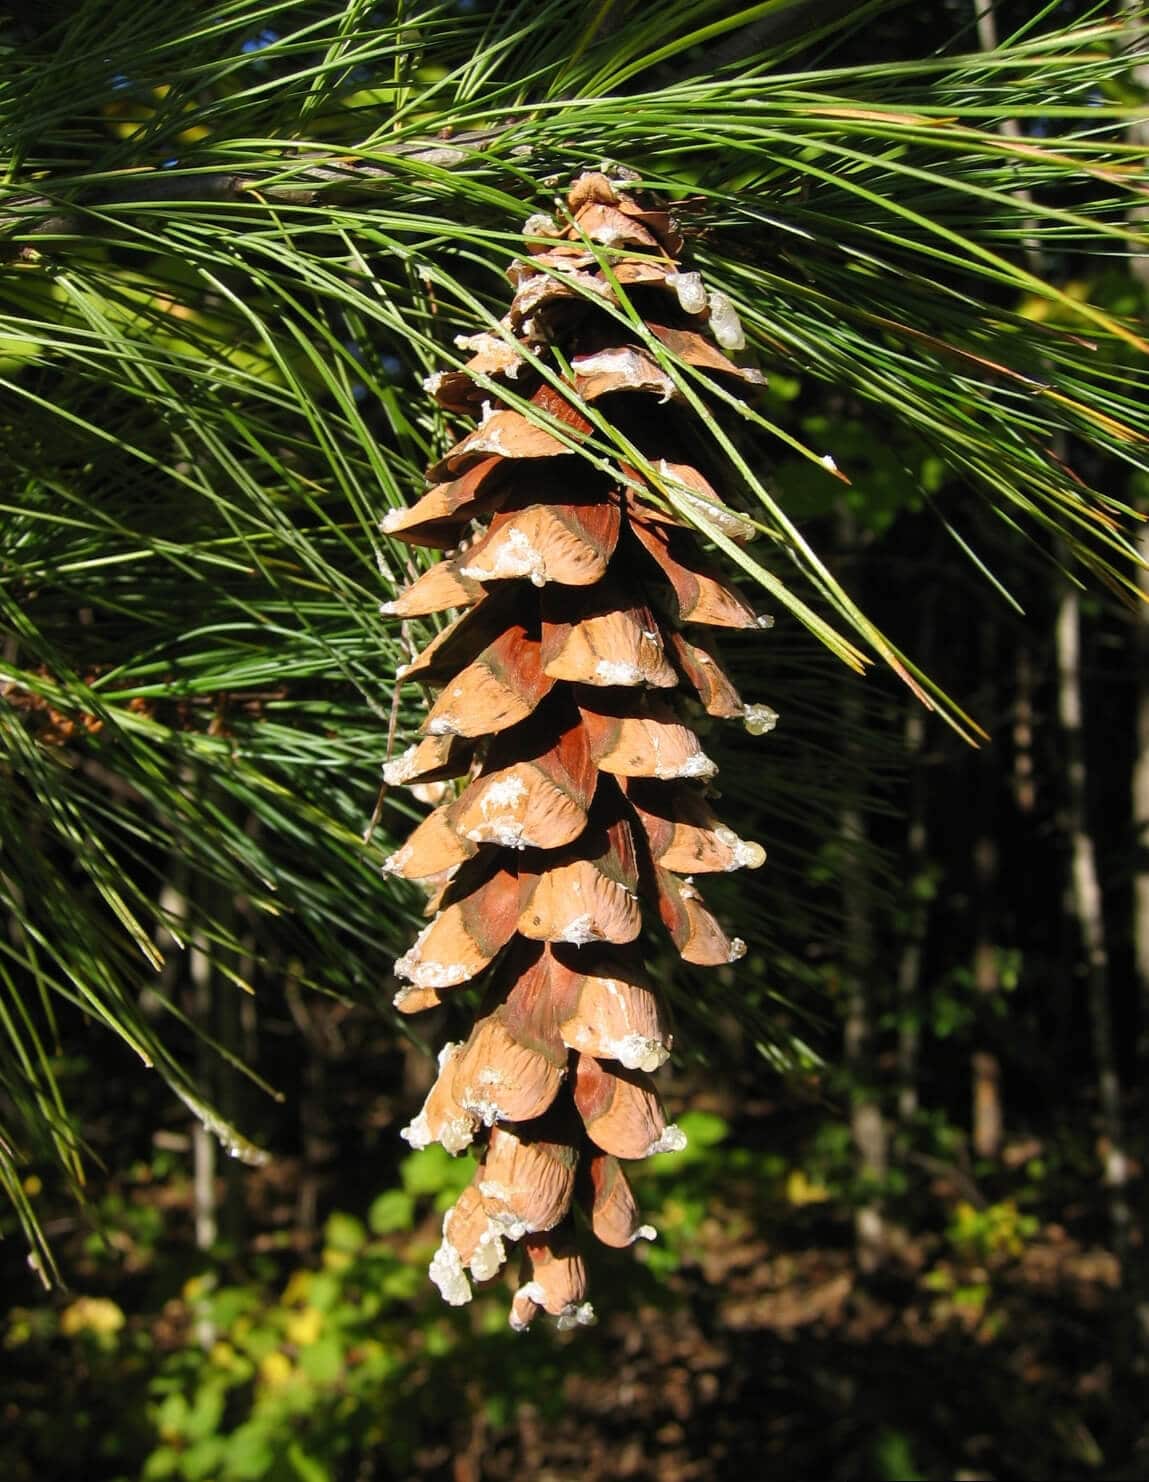 Pine tree fruit uses